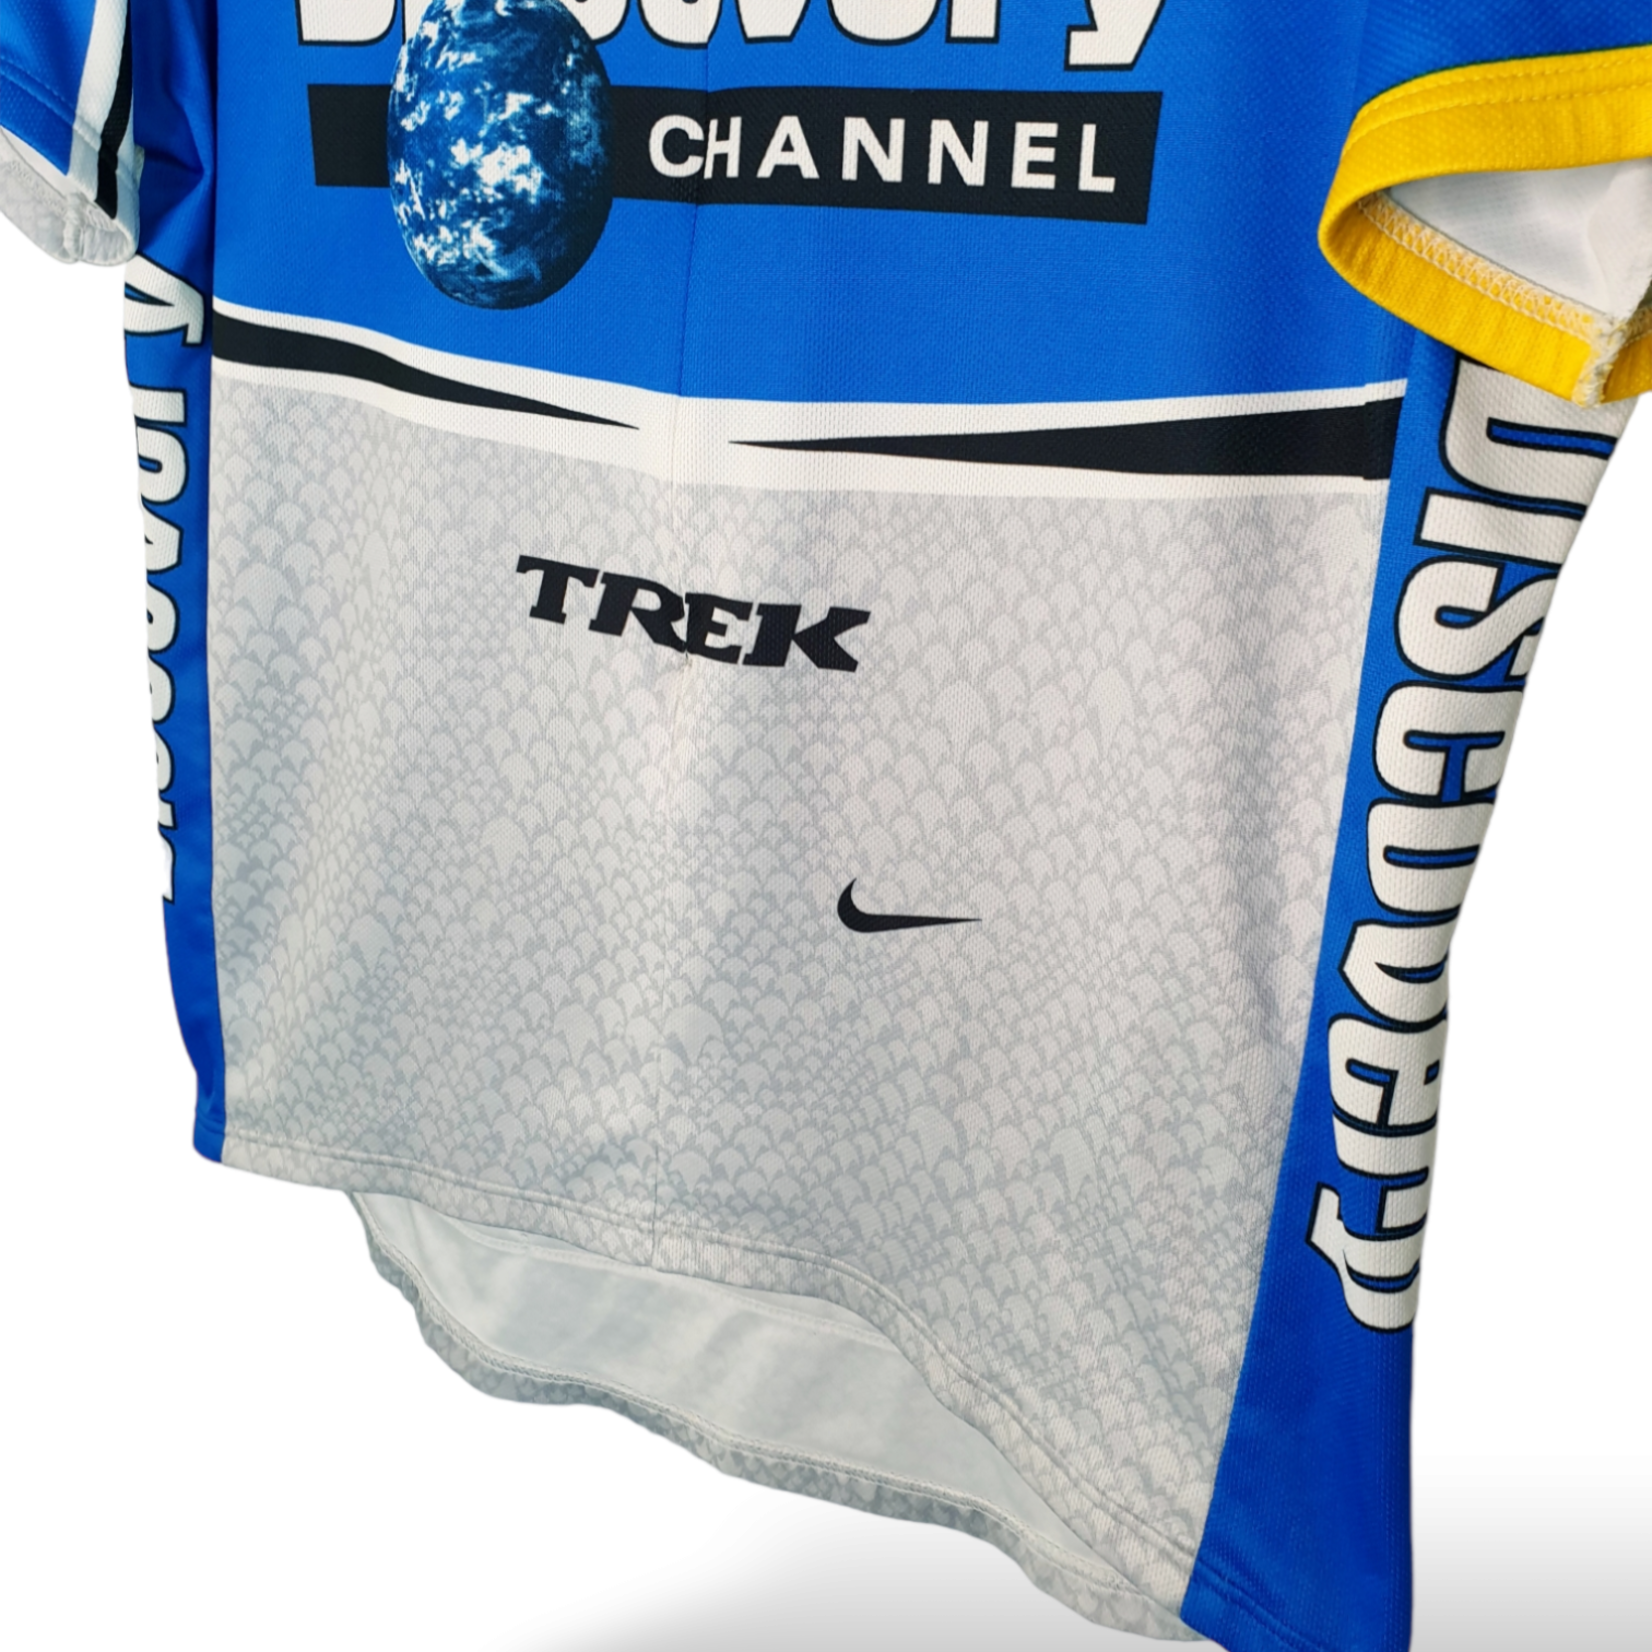 Nike Original Nike vintage cycling shirt Discovery Channel Pro Cycling 2005